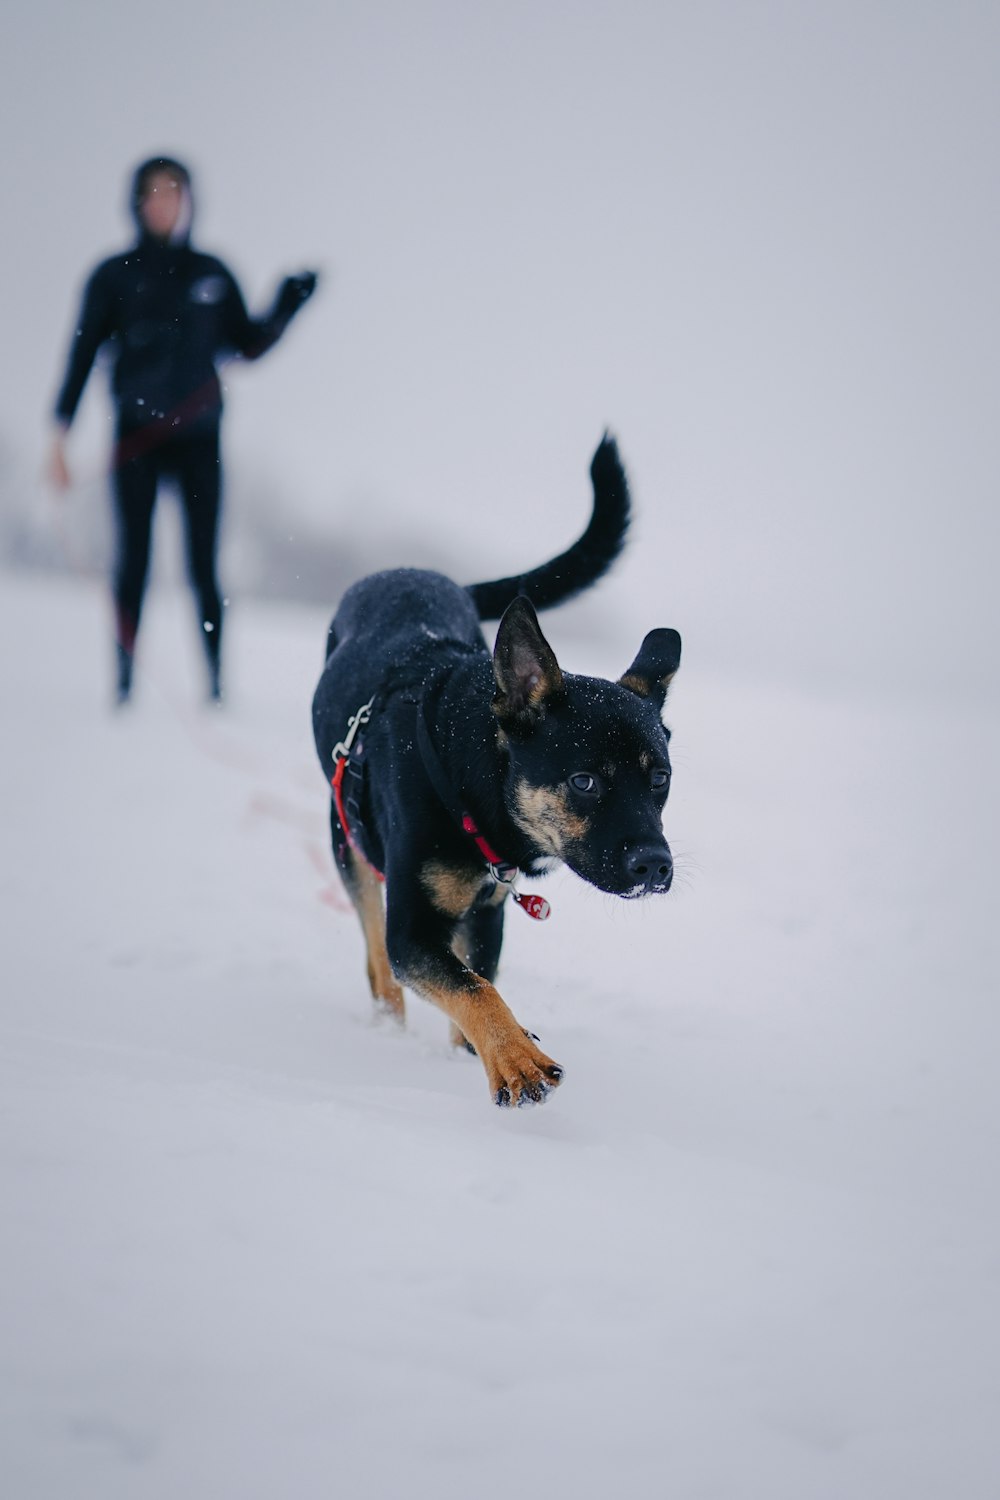 black and tan short coat medium dog running on snow covered ground during daytime